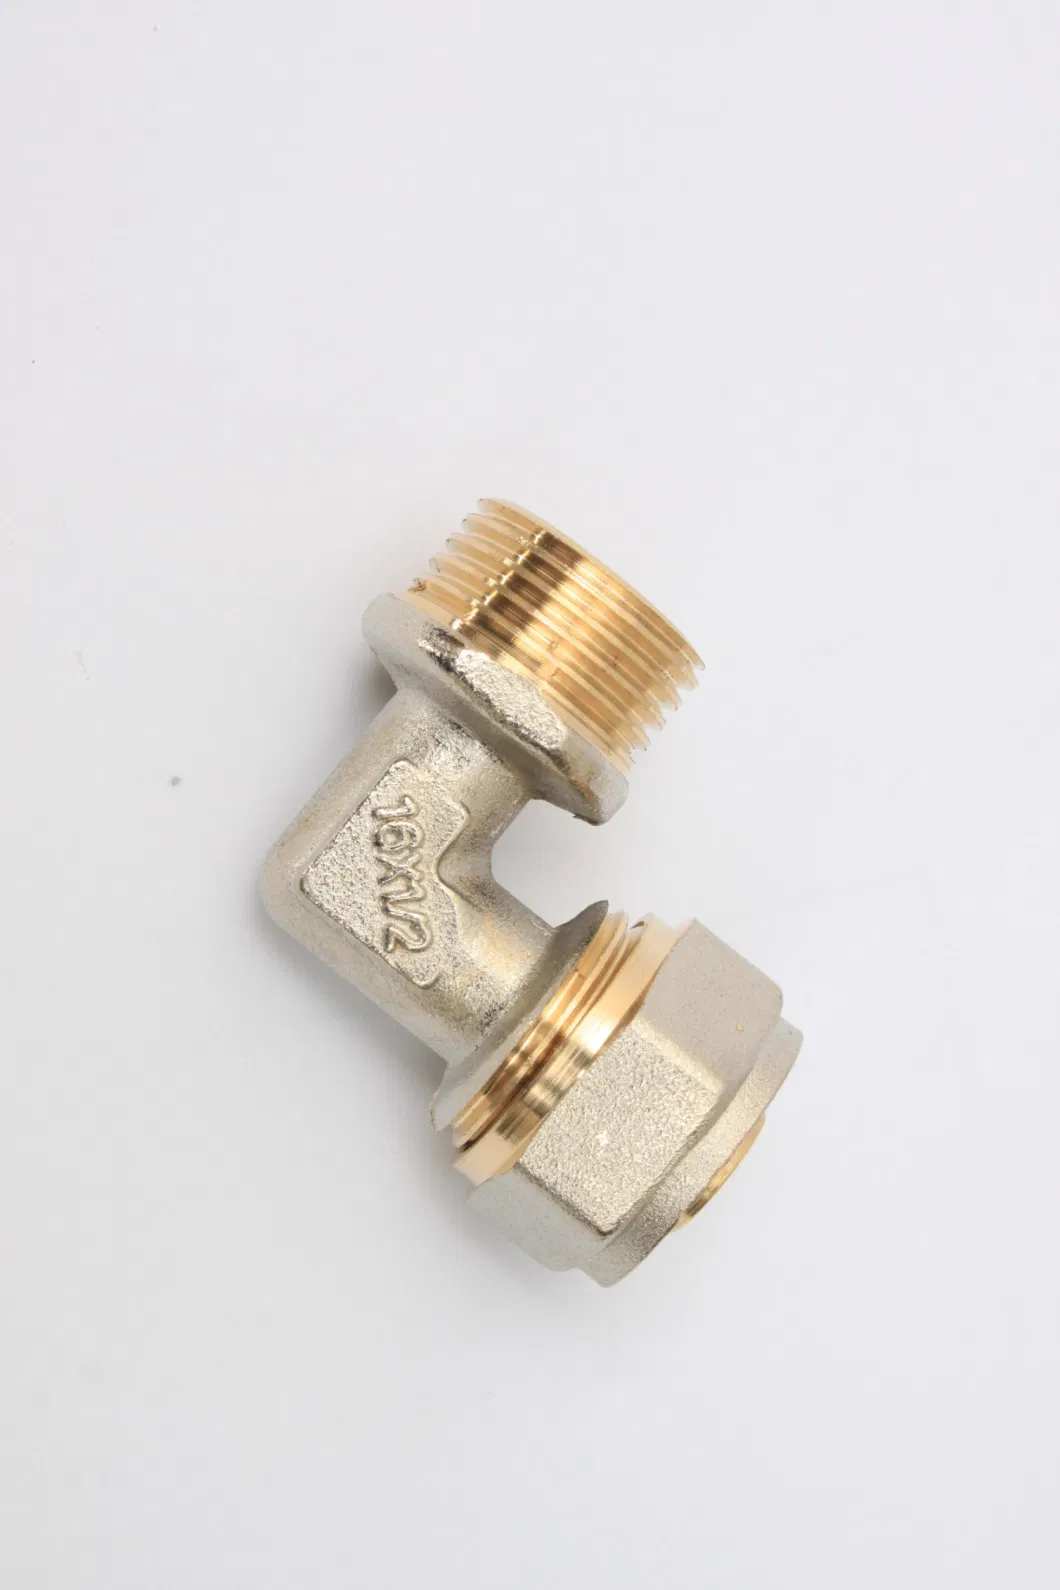 Brass Male Tee Multilayer Pex Compression Fittings Copper Pipe/Copper Pipe Fitting/Brass Male Tee